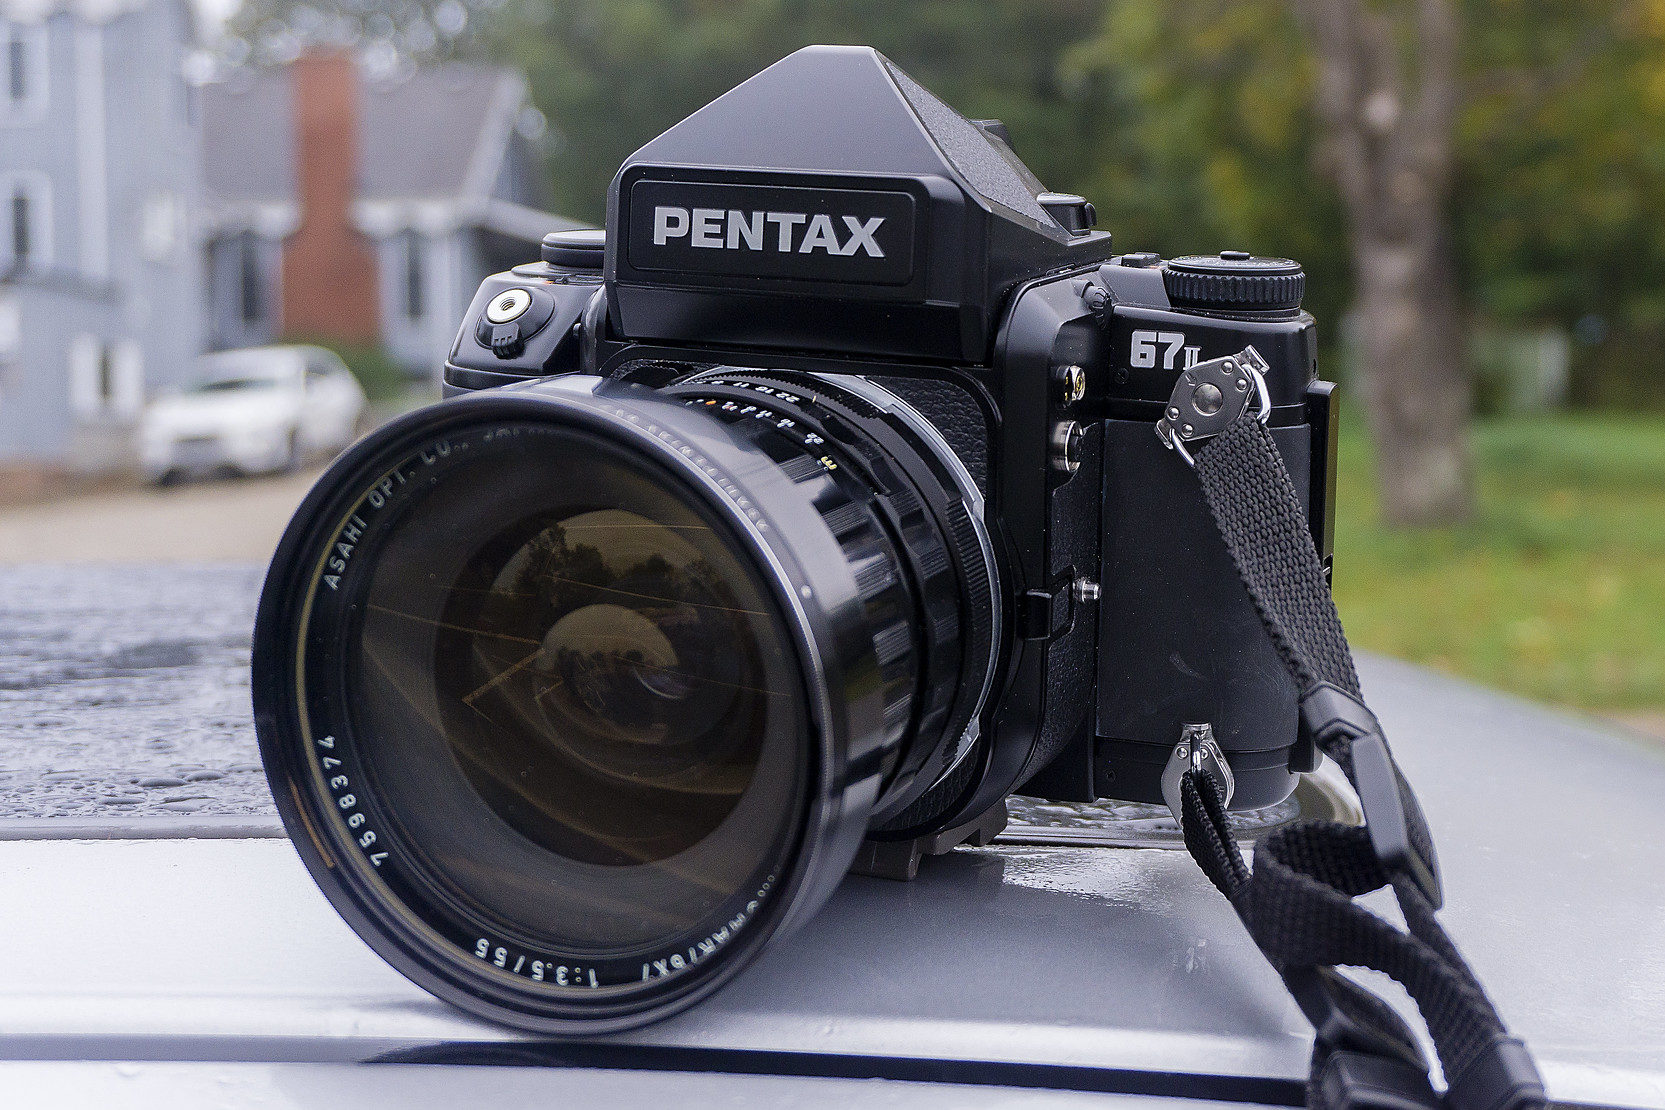 Photograph of a Pentax 67II camera, taken by Alex Luyckx.